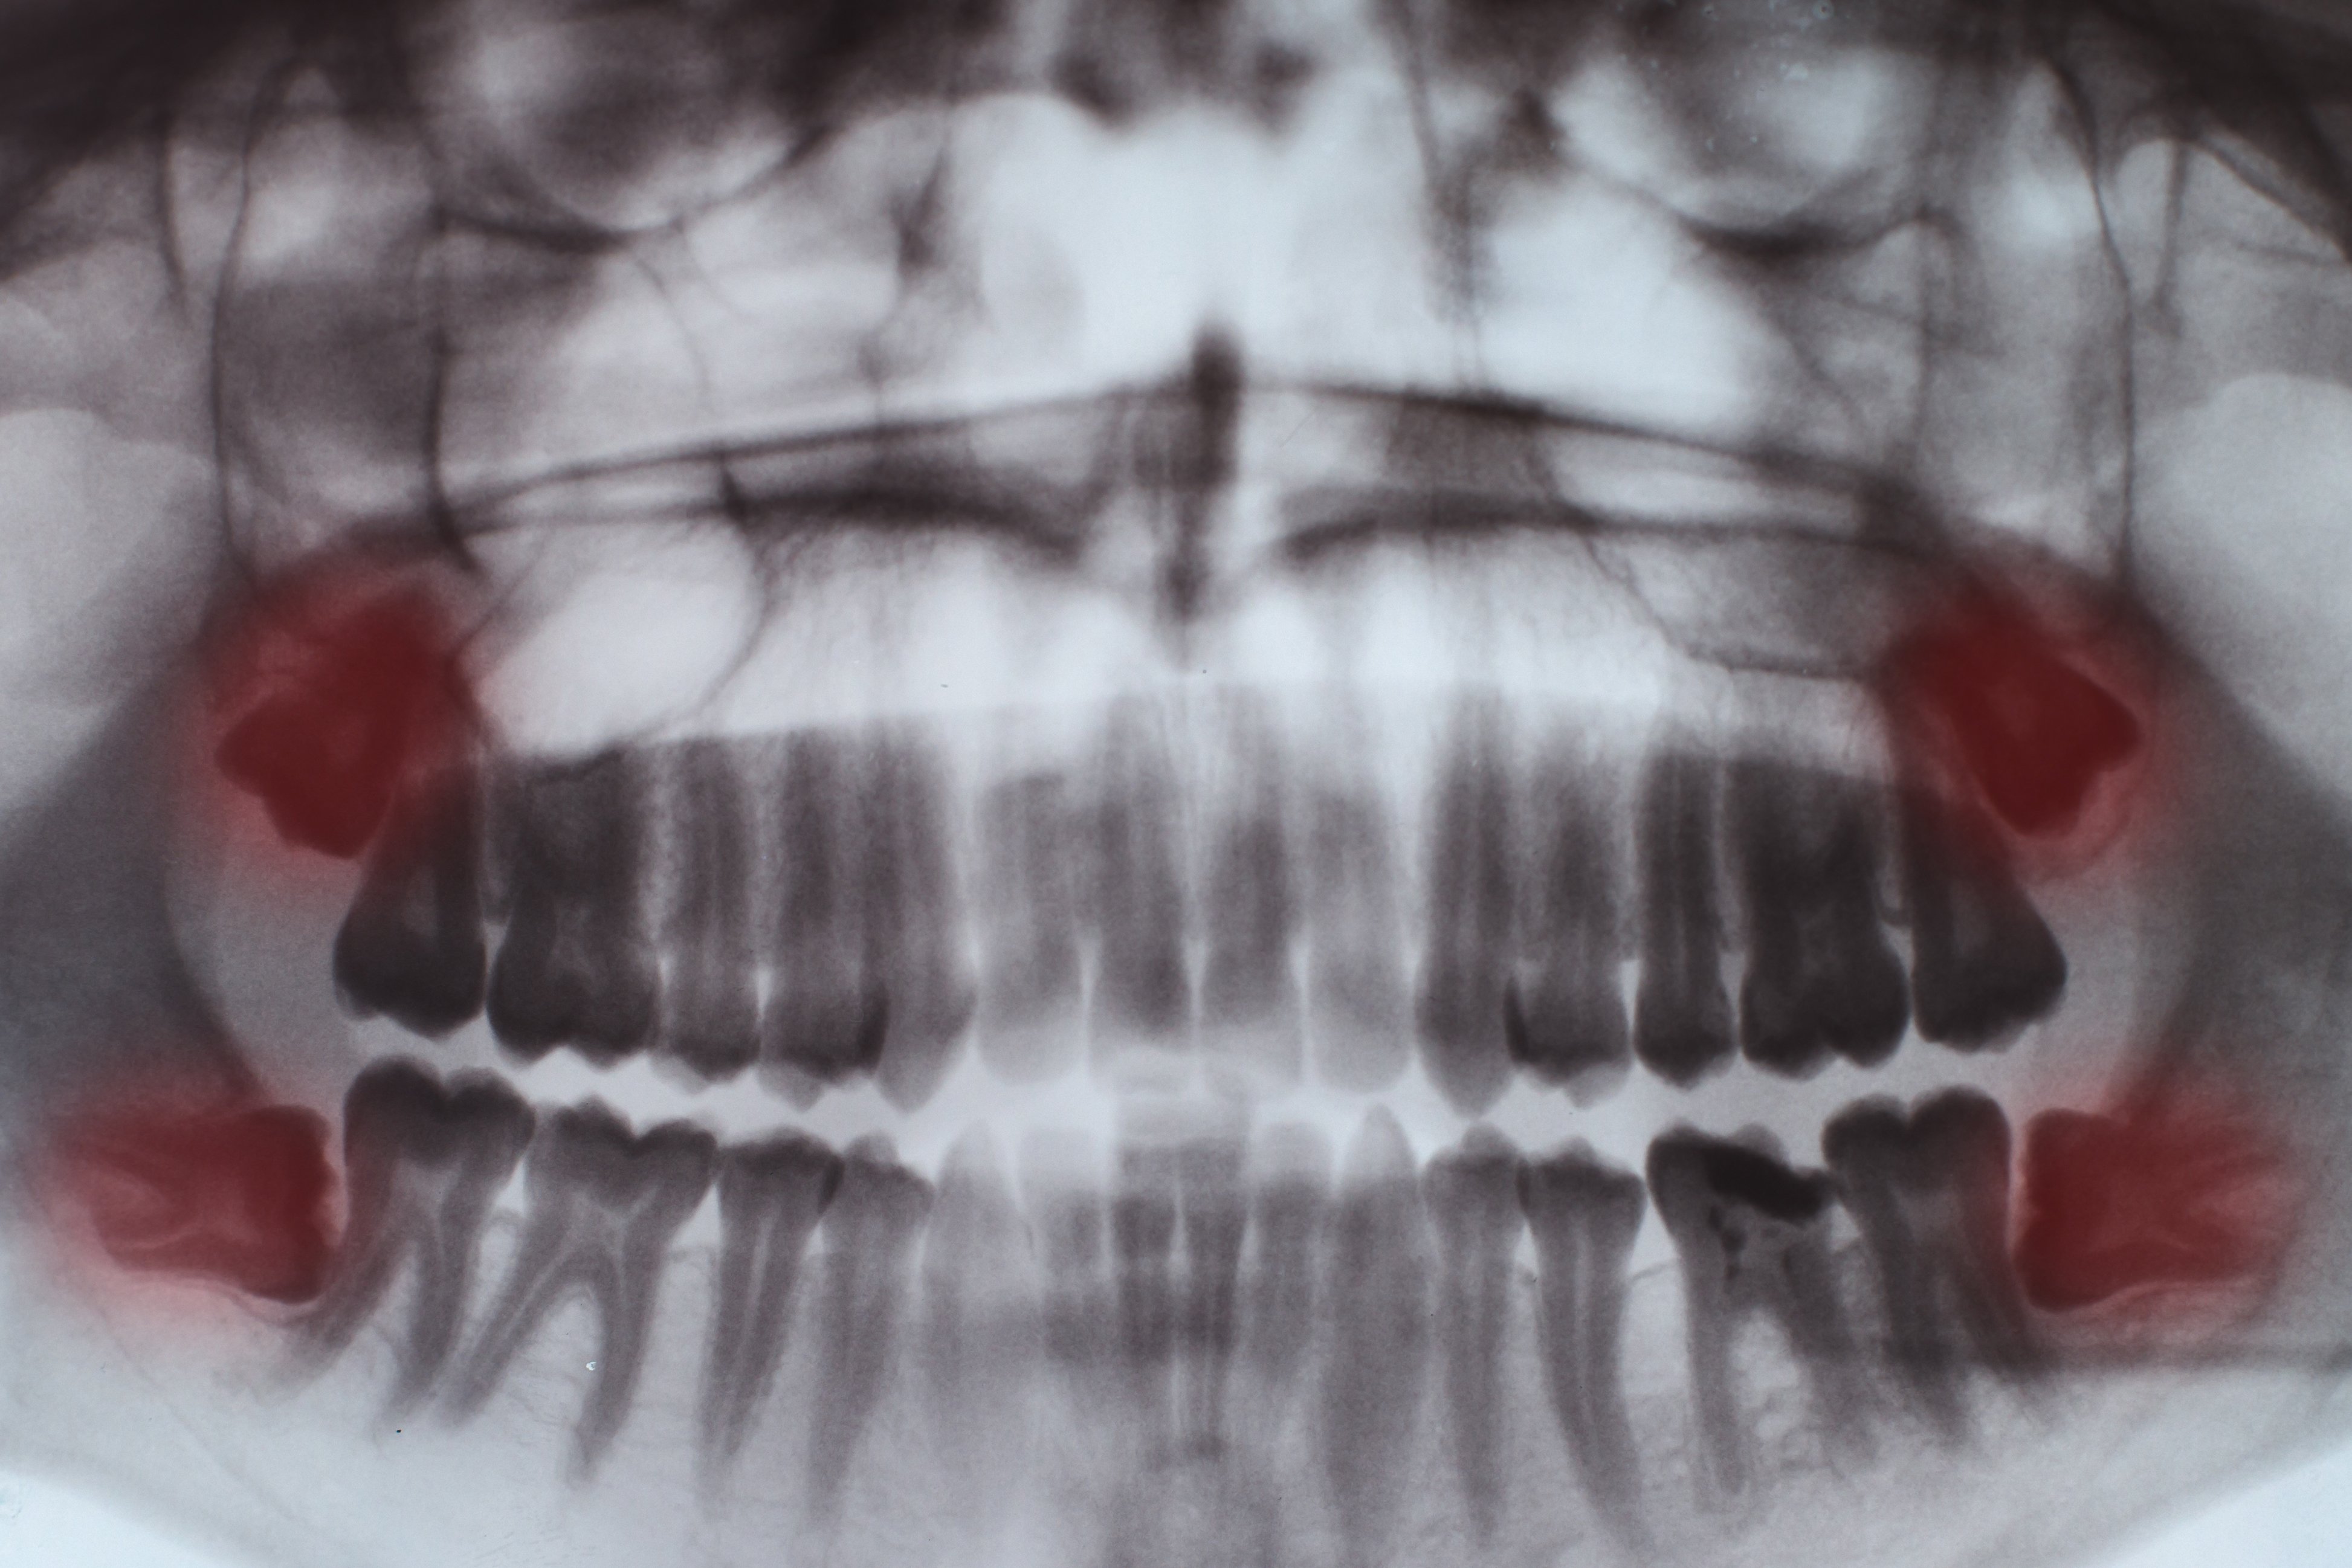 teeth-full-x-ray-FUGEHH8